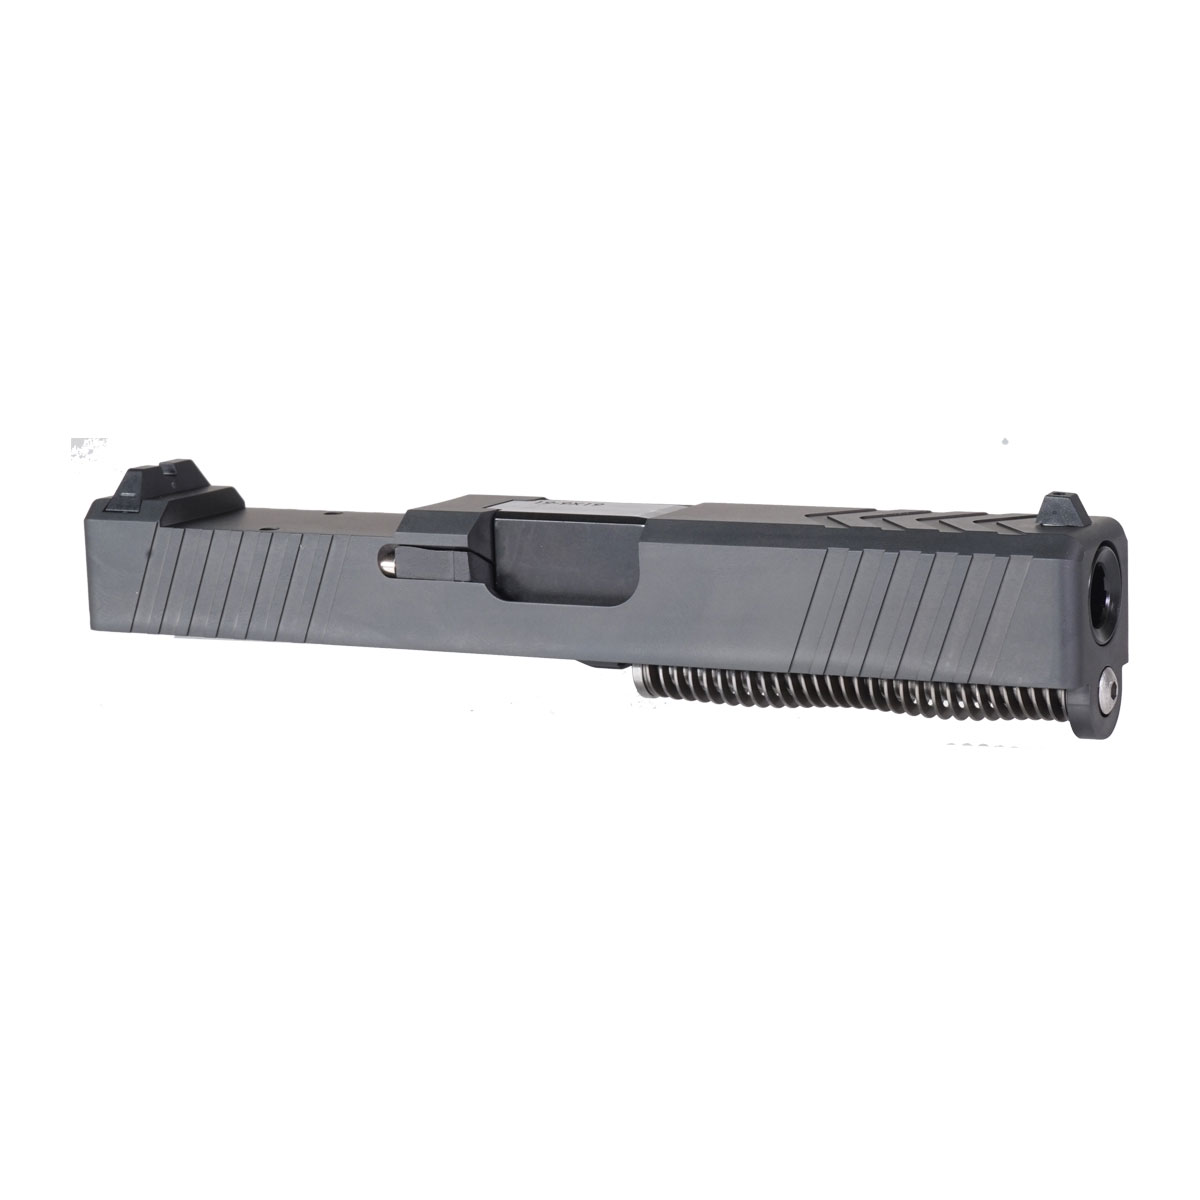 OTD 'The Petersen' 9mm Complete Slide Kit - Glock 19 Gen 1-3 Compatible